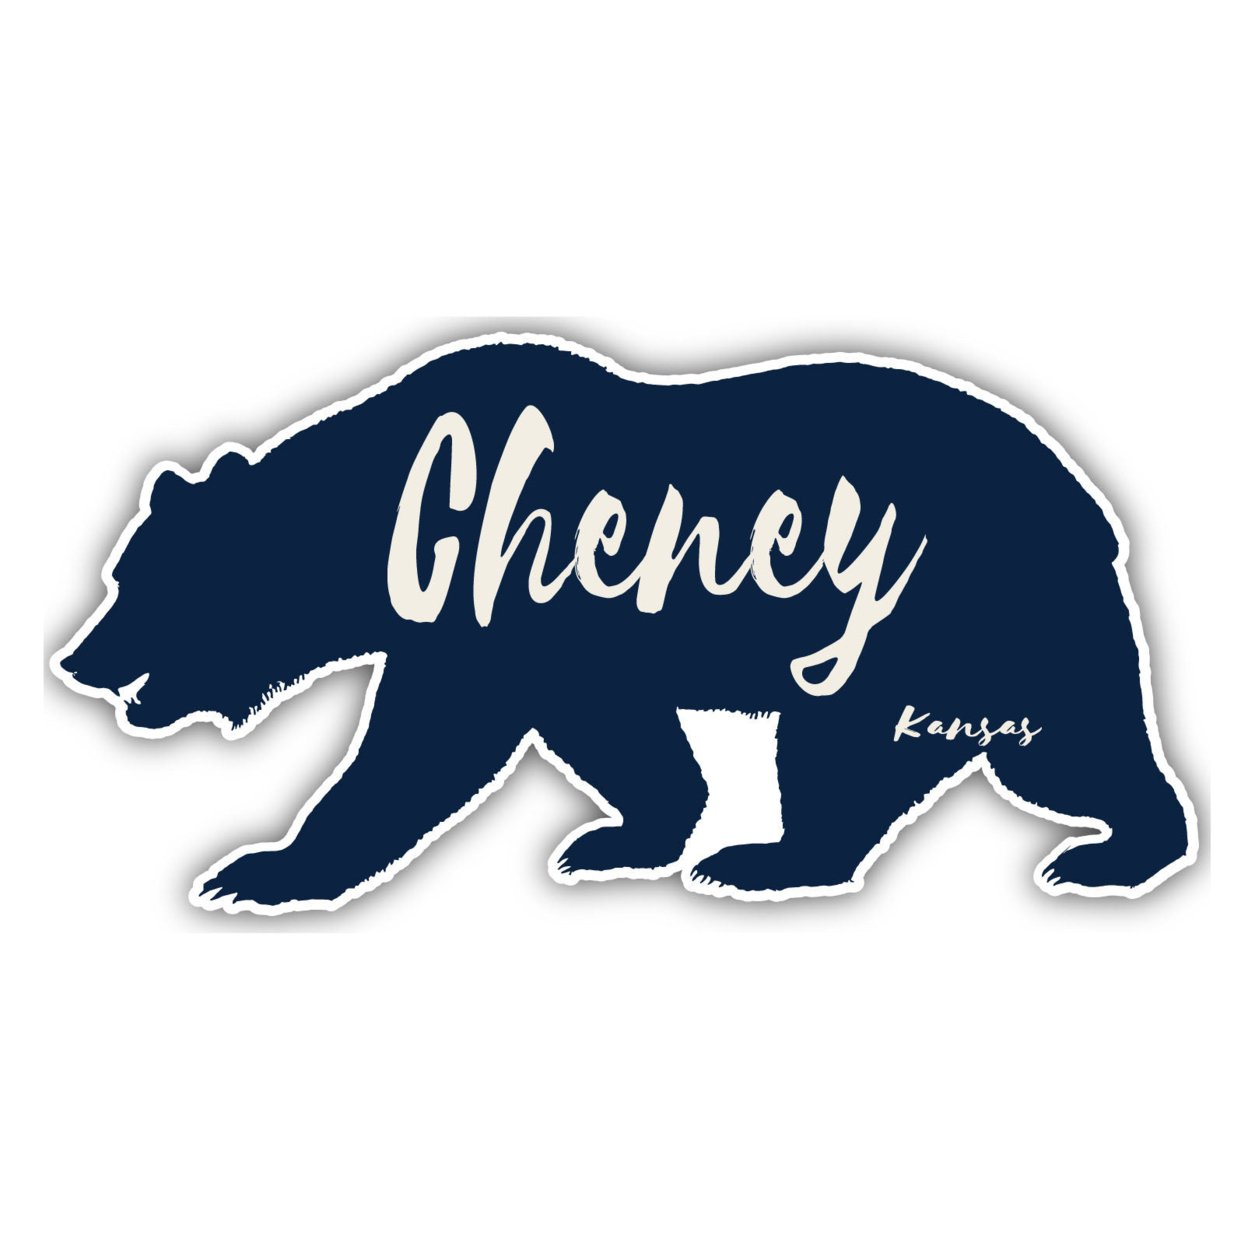 Cheney Kansas Souvenir Decorative Stickers (Choose Theme And Size) - 4-Pack, 2-Inch, Bear